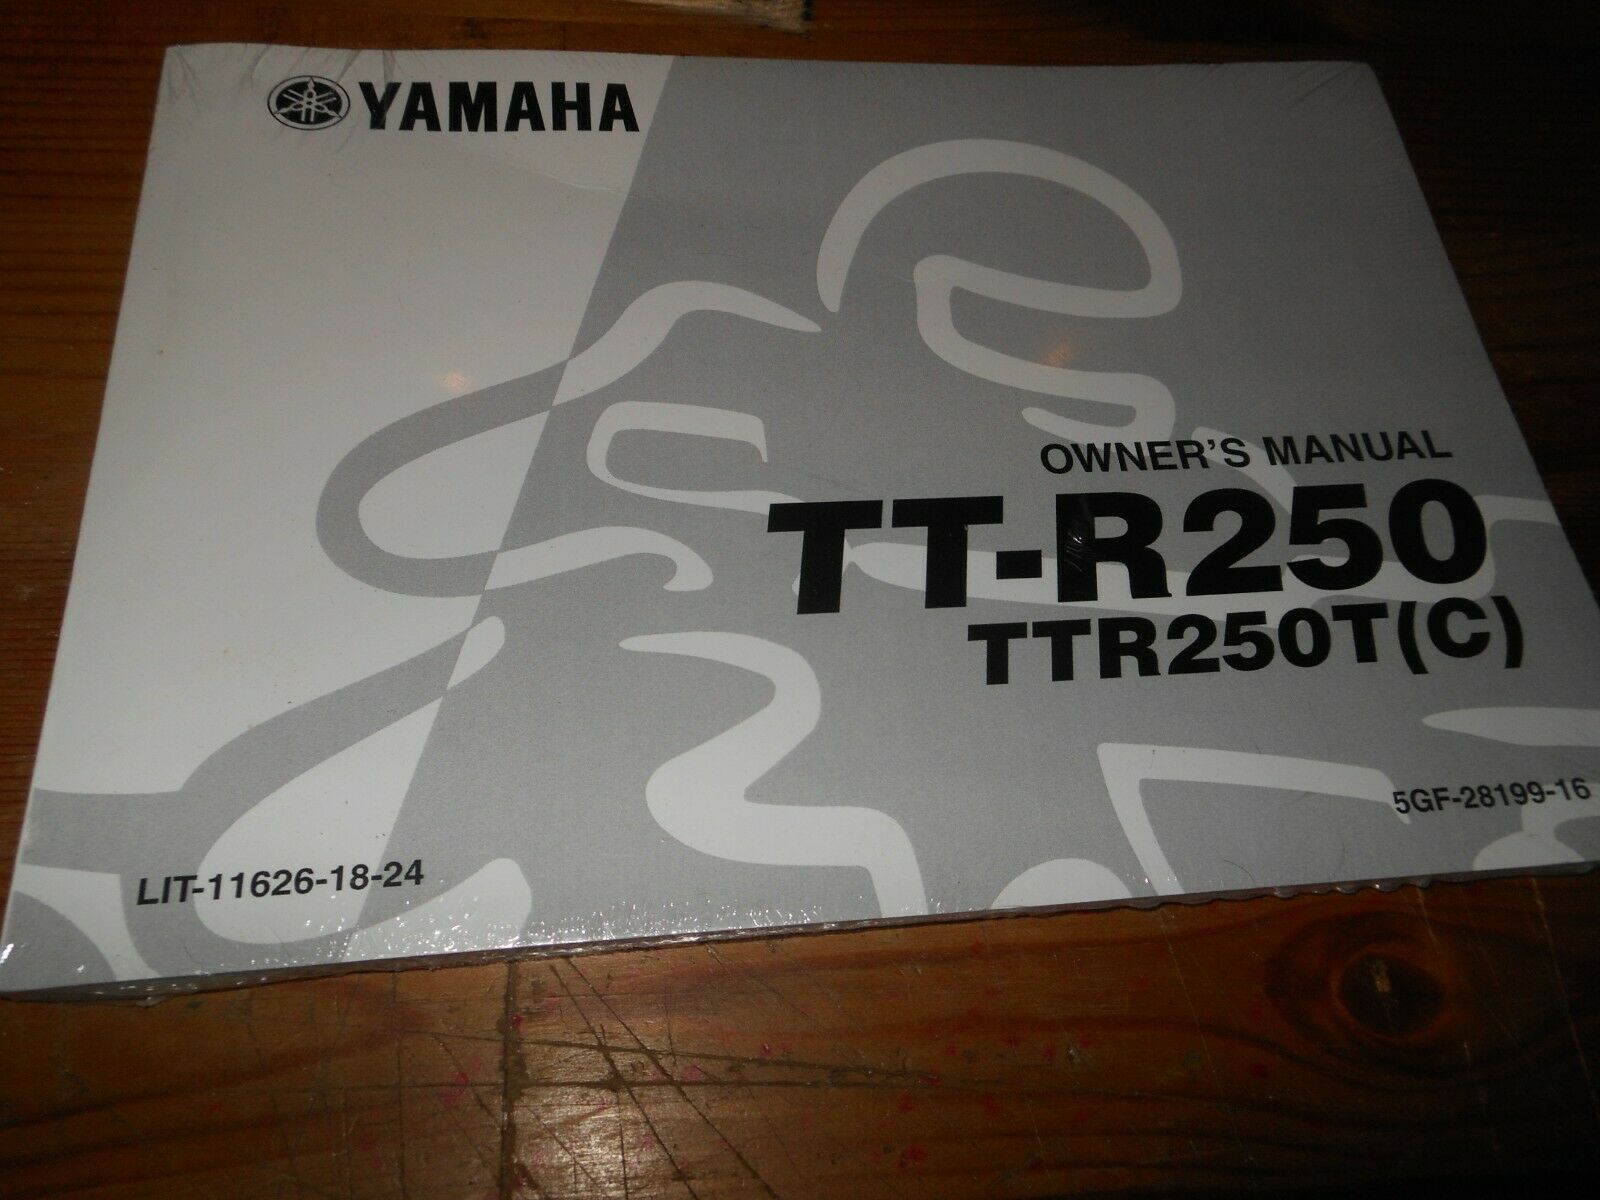 New Oem Yamaha Tt-r250 Ttr250t (c) Owner's Manual  # Lit-11626-18-24